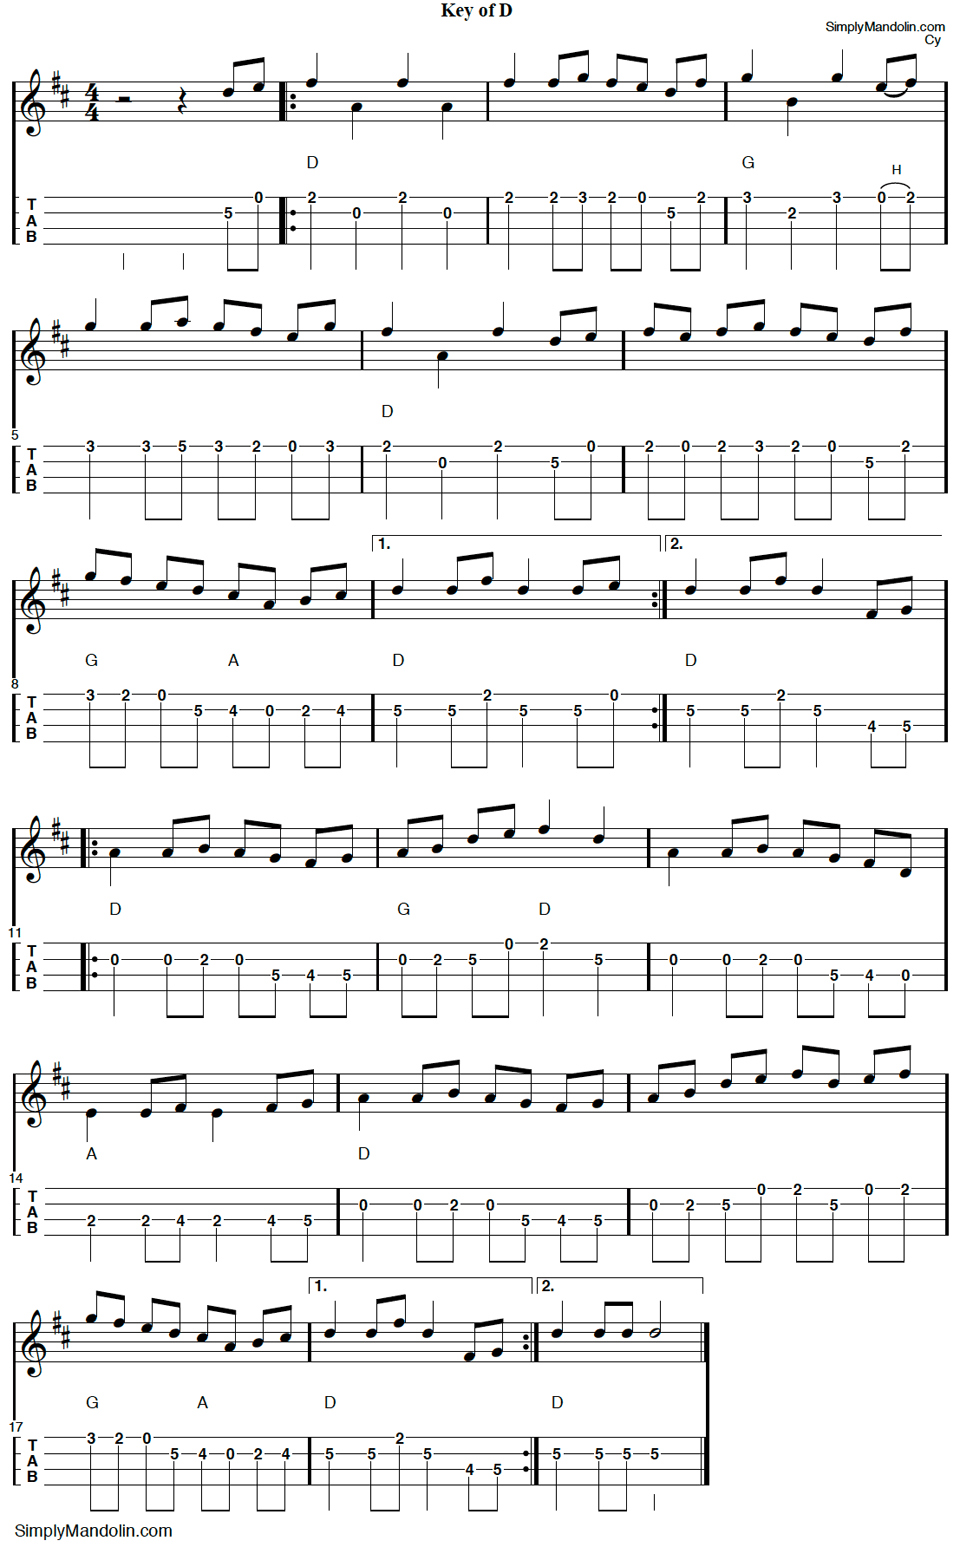 mandolin tab for the bluegrass tune "Liberty".